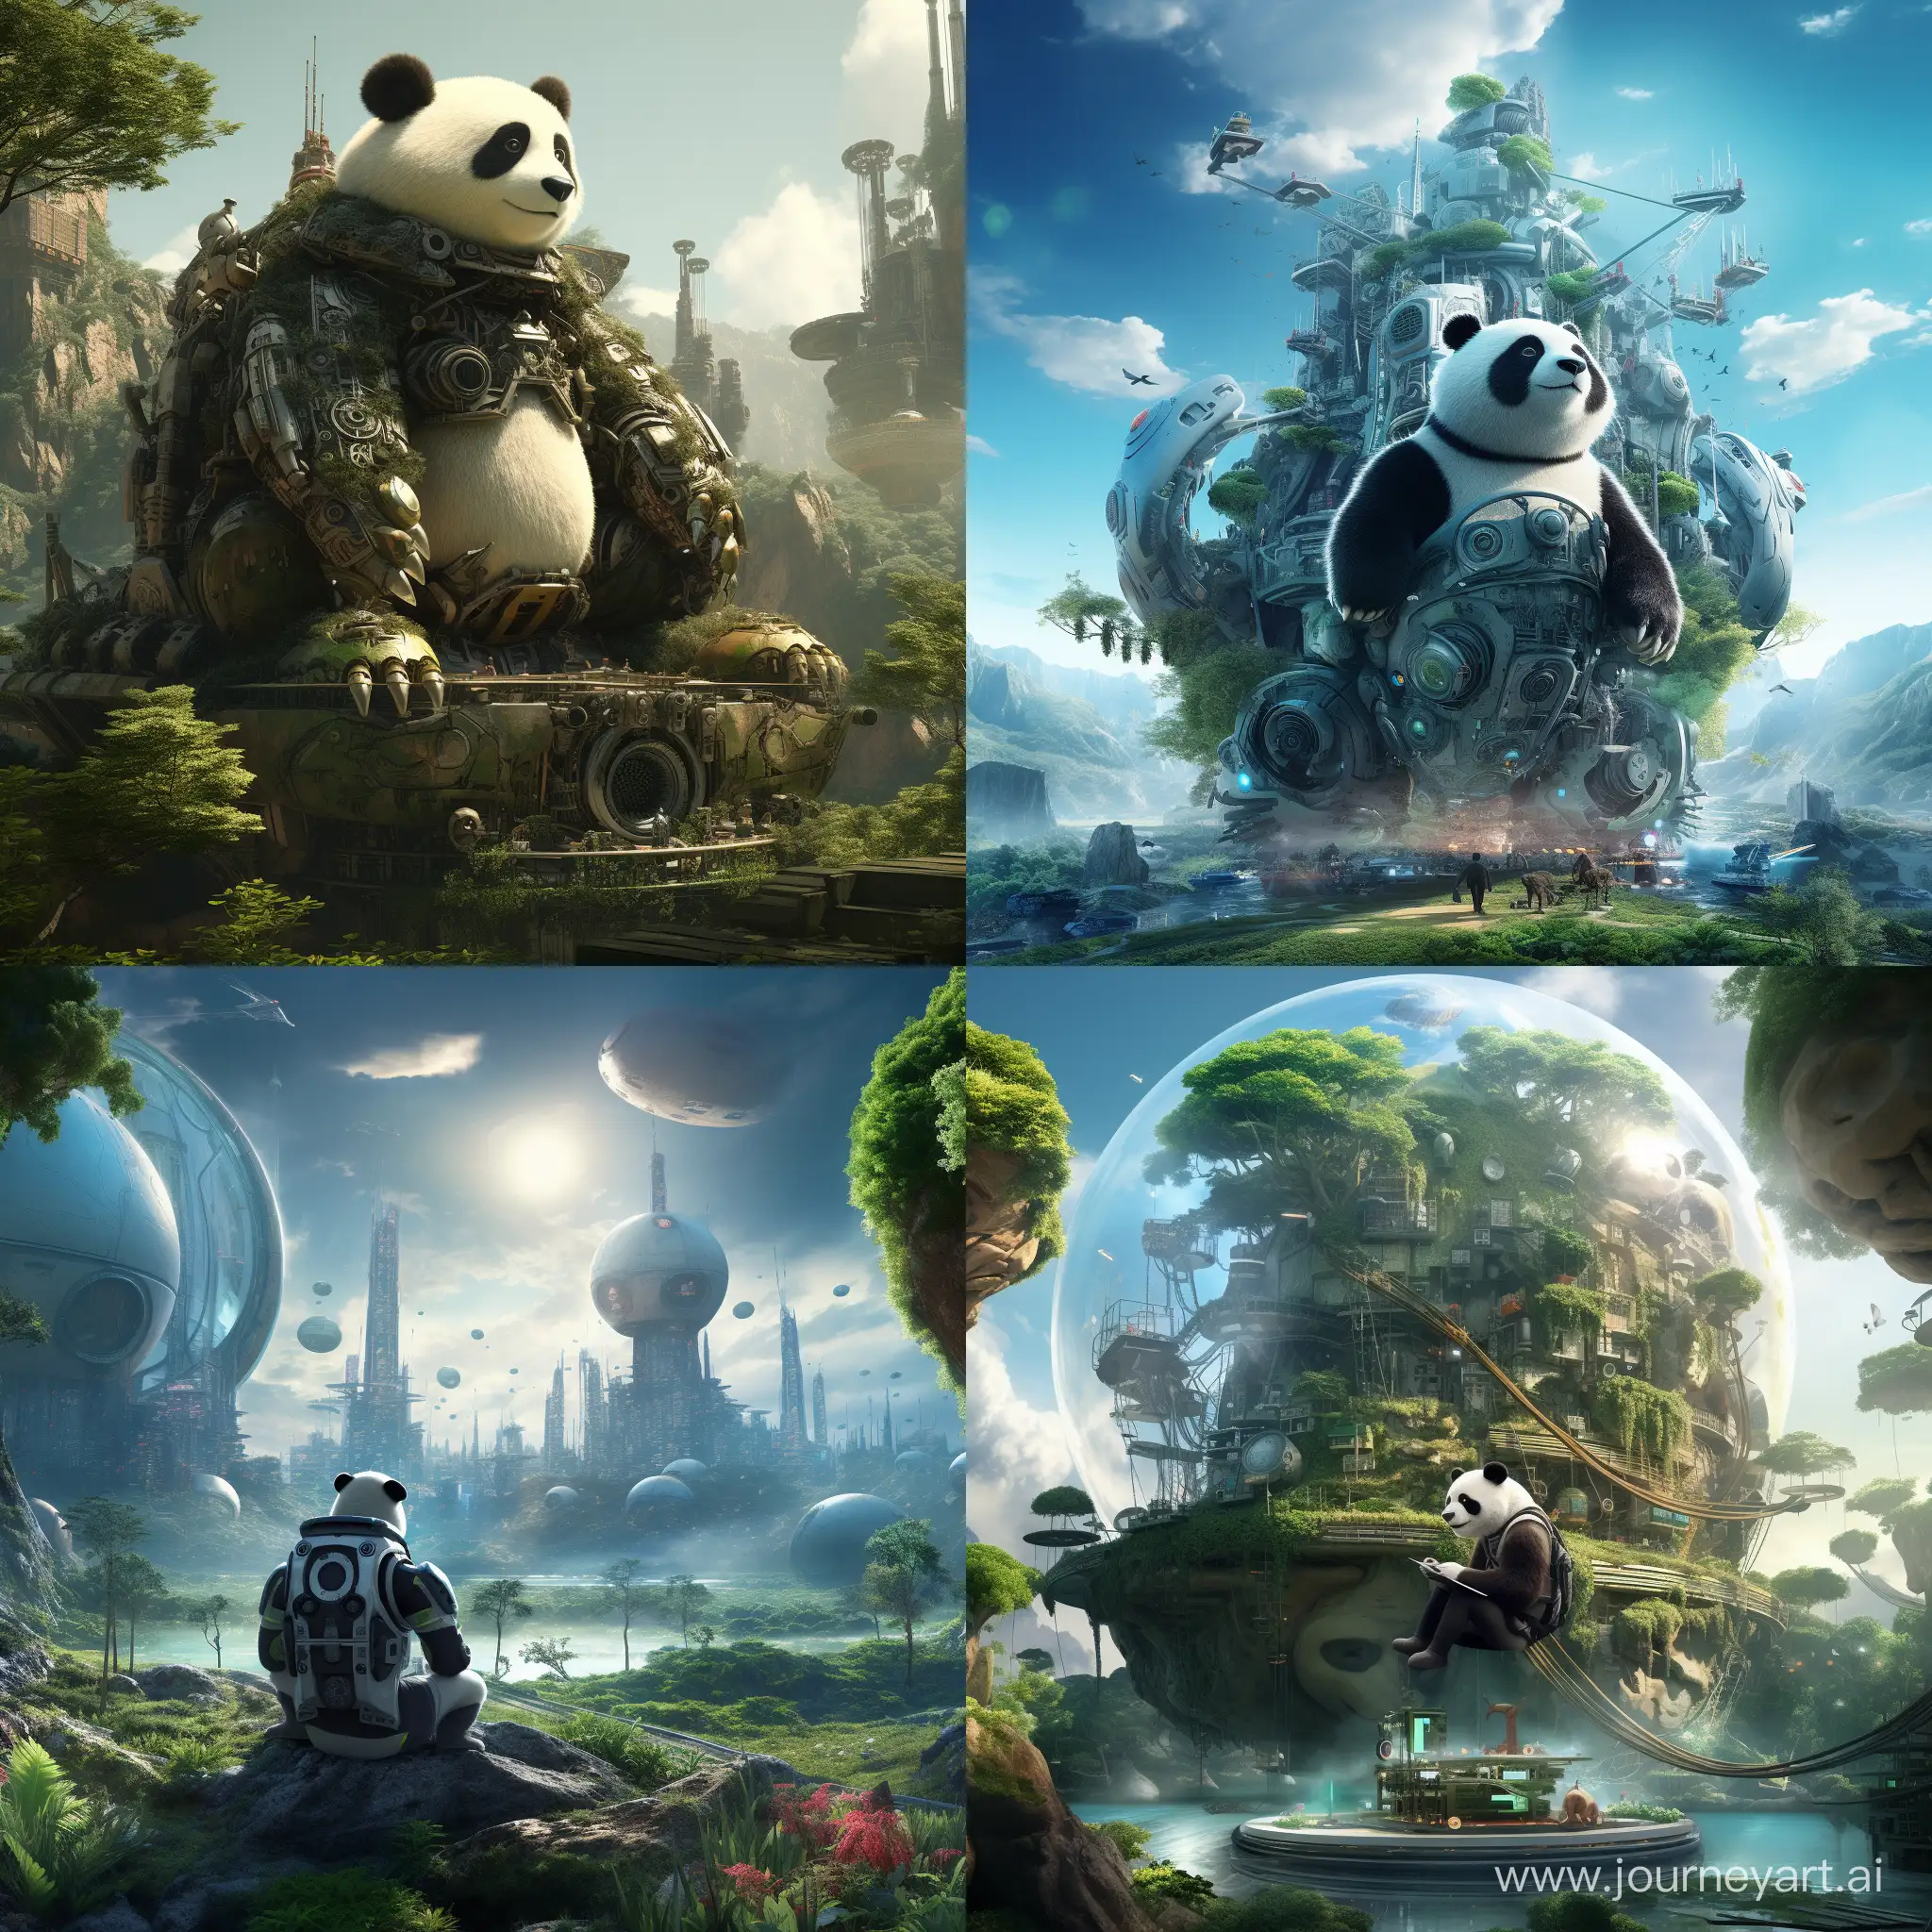 Futuristic-Encounter-Giant-Panda-in-a-11-Augmented-Reality-Landscape